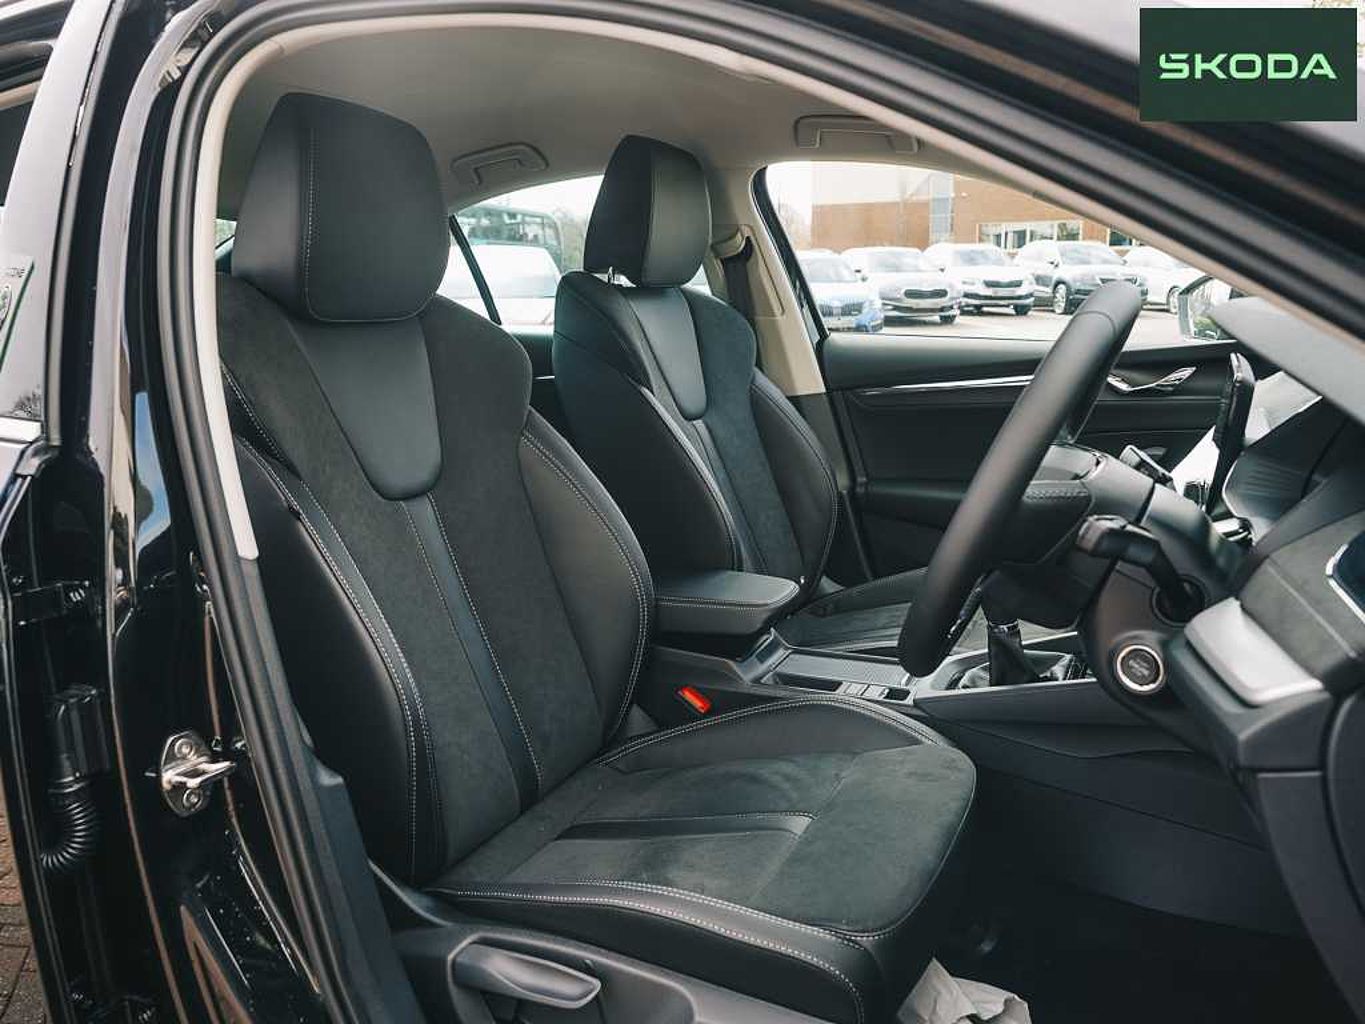 SKODA Octavia Hatchback 1.5 TSI ACT SE L (150PS)